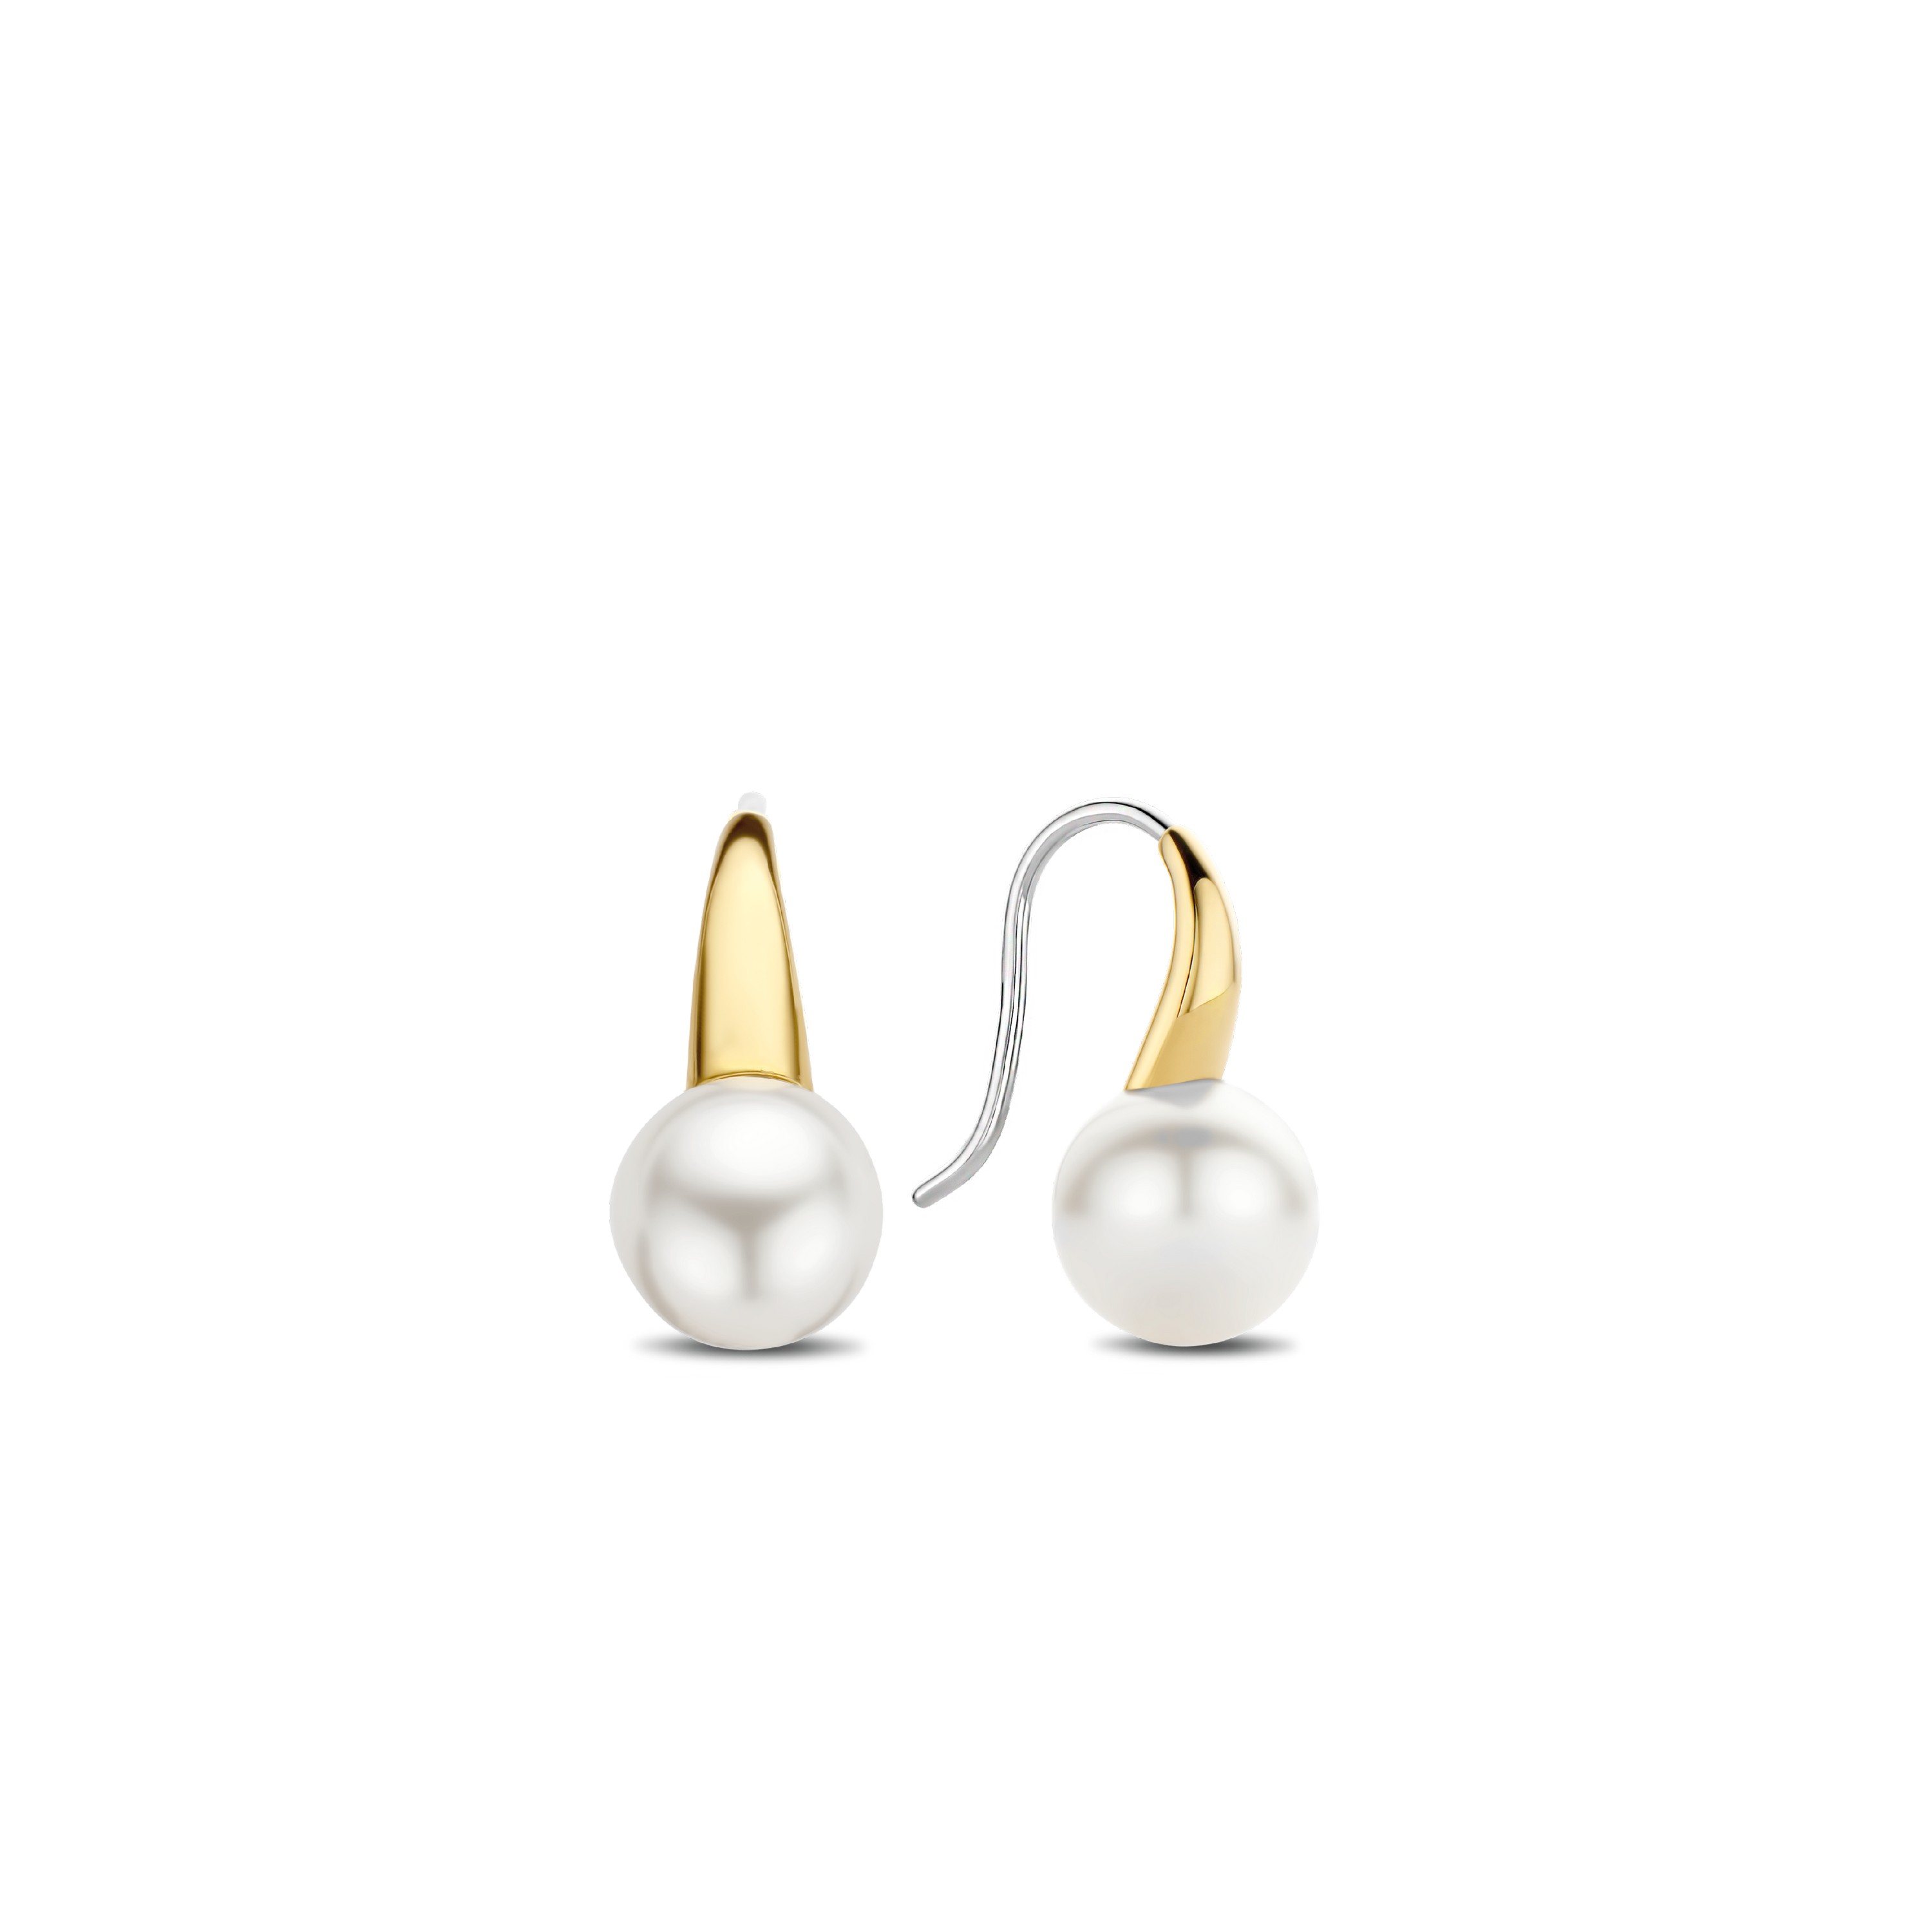 TI SENTO - Milano Earrings 7849PW Gala Jewelers Inc. White Oak, PA